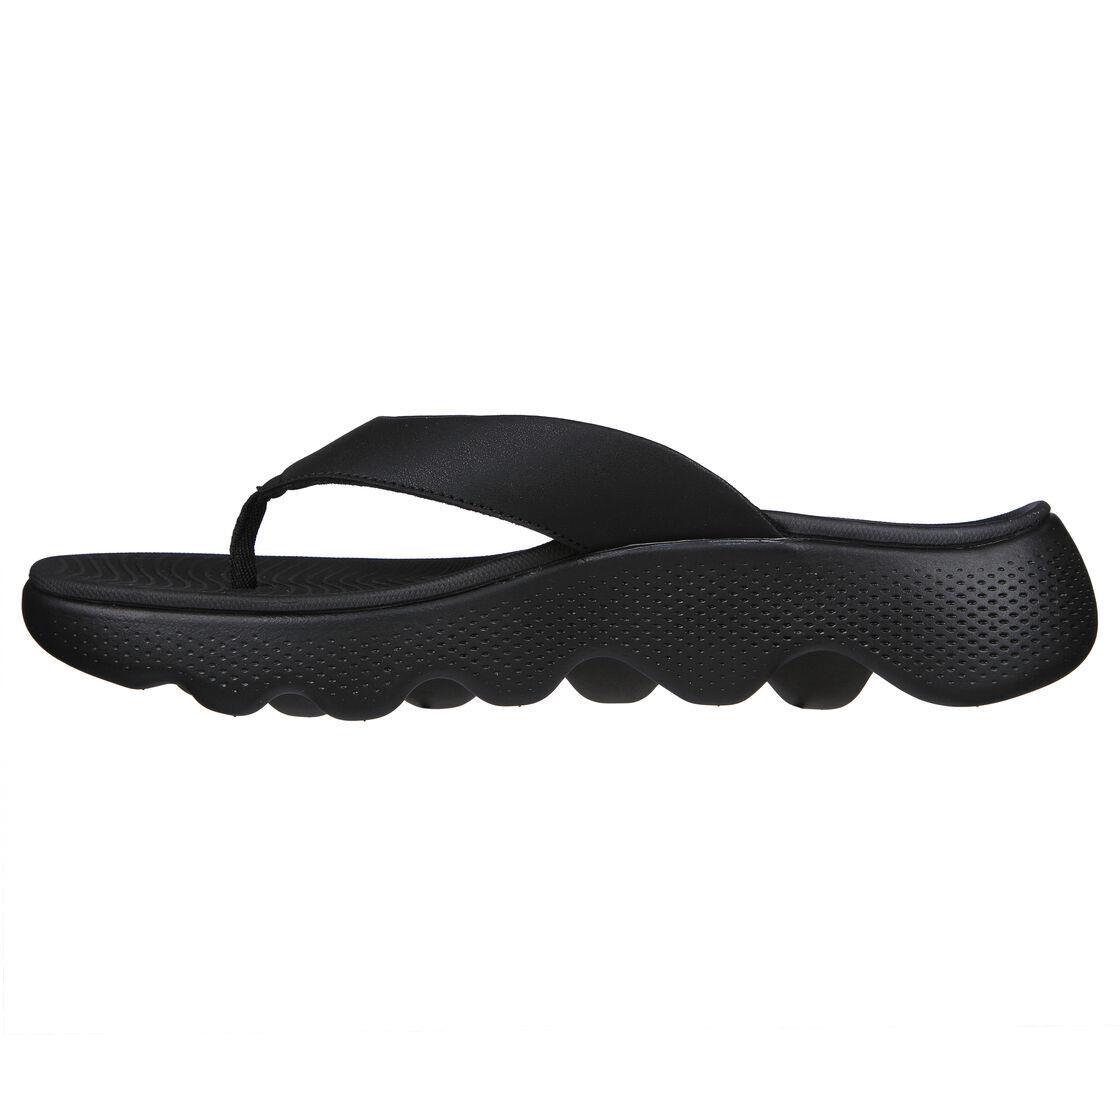 Mens Skechers GO Walk Massage Fit Black Foam Sandals Shoes